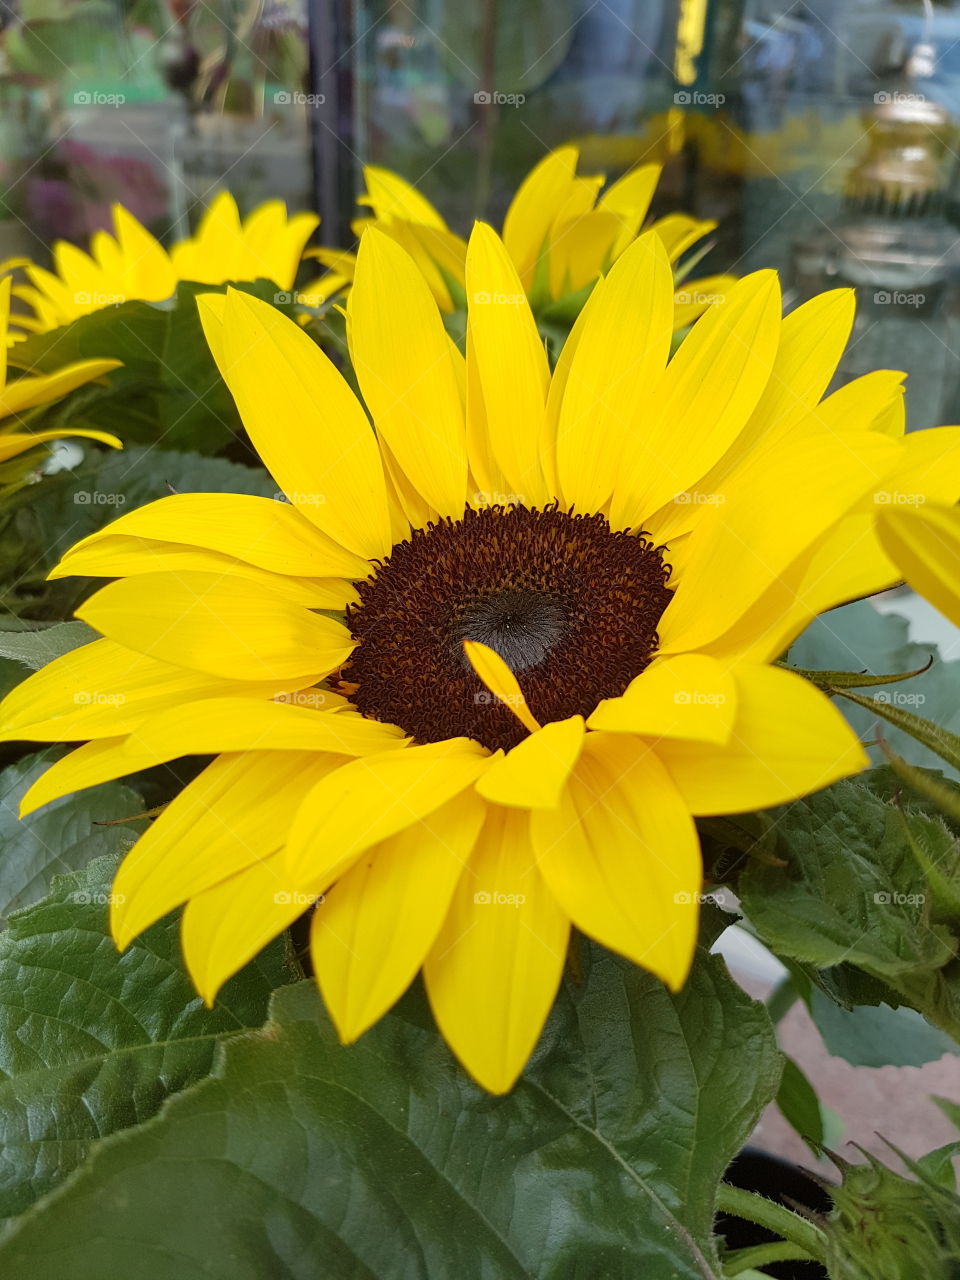 sunflower season here again